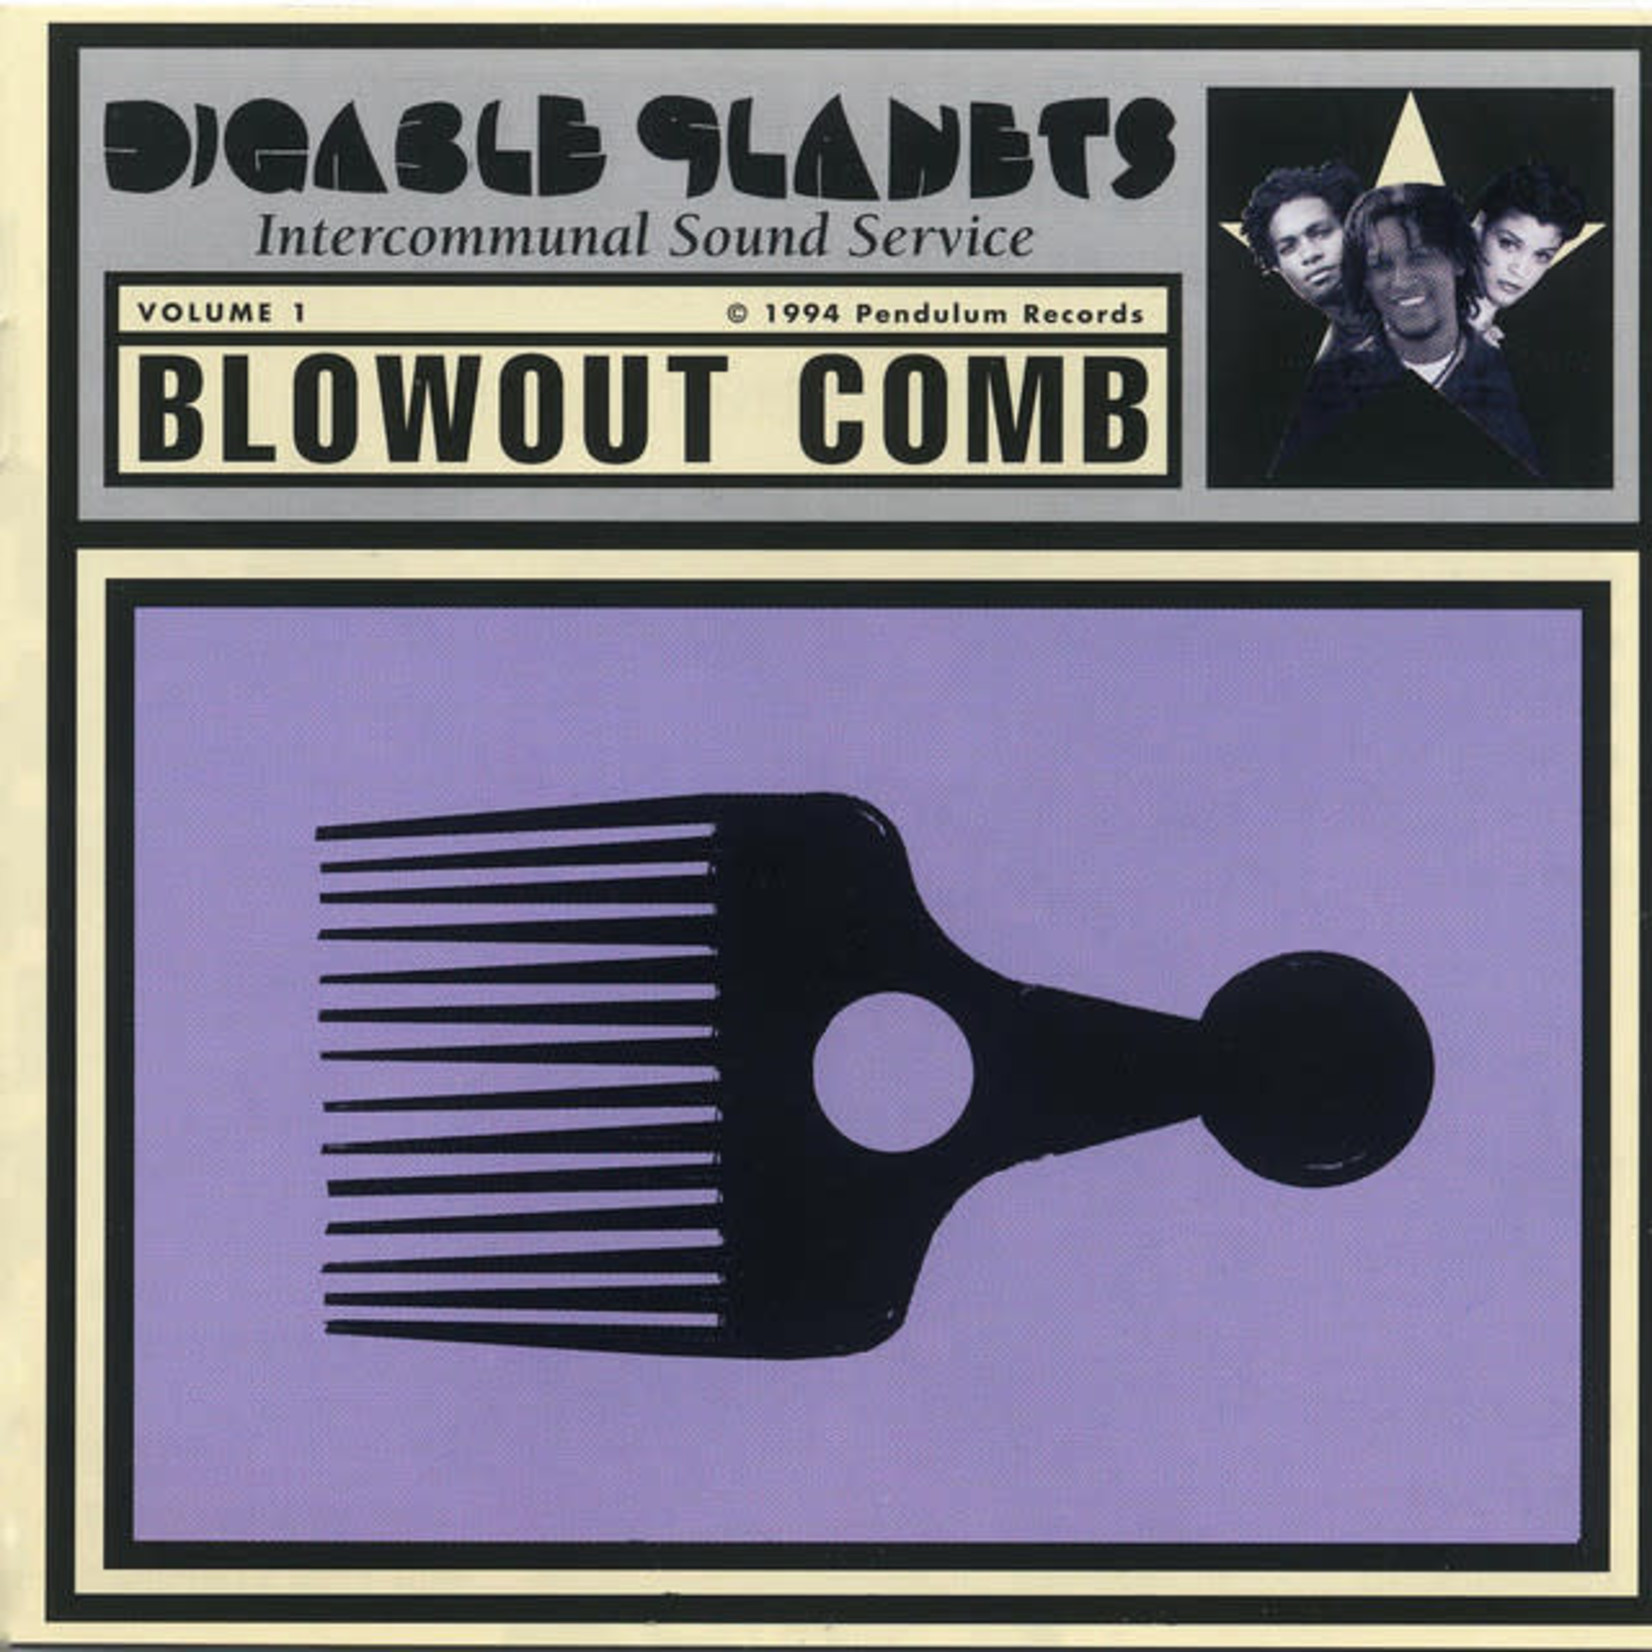 [New] Digable Planets - Blowout Comb (2LP, clear vinyl)